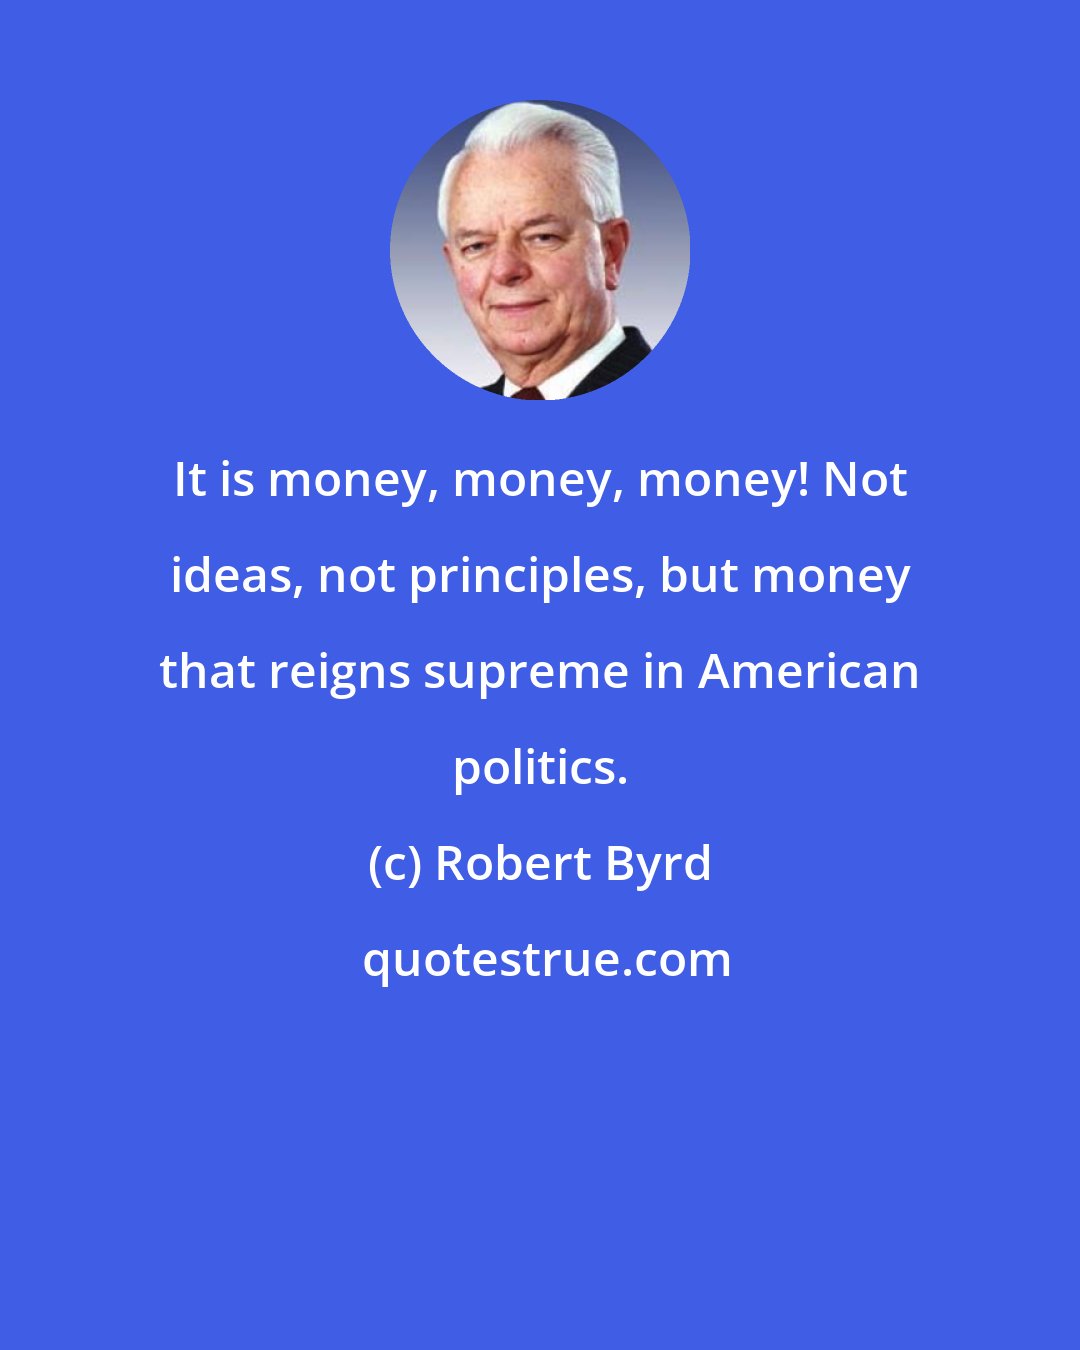 Robert Byrd: It is money, money, money! Not ideas, not principles, but money that reigns supreme in American politics.